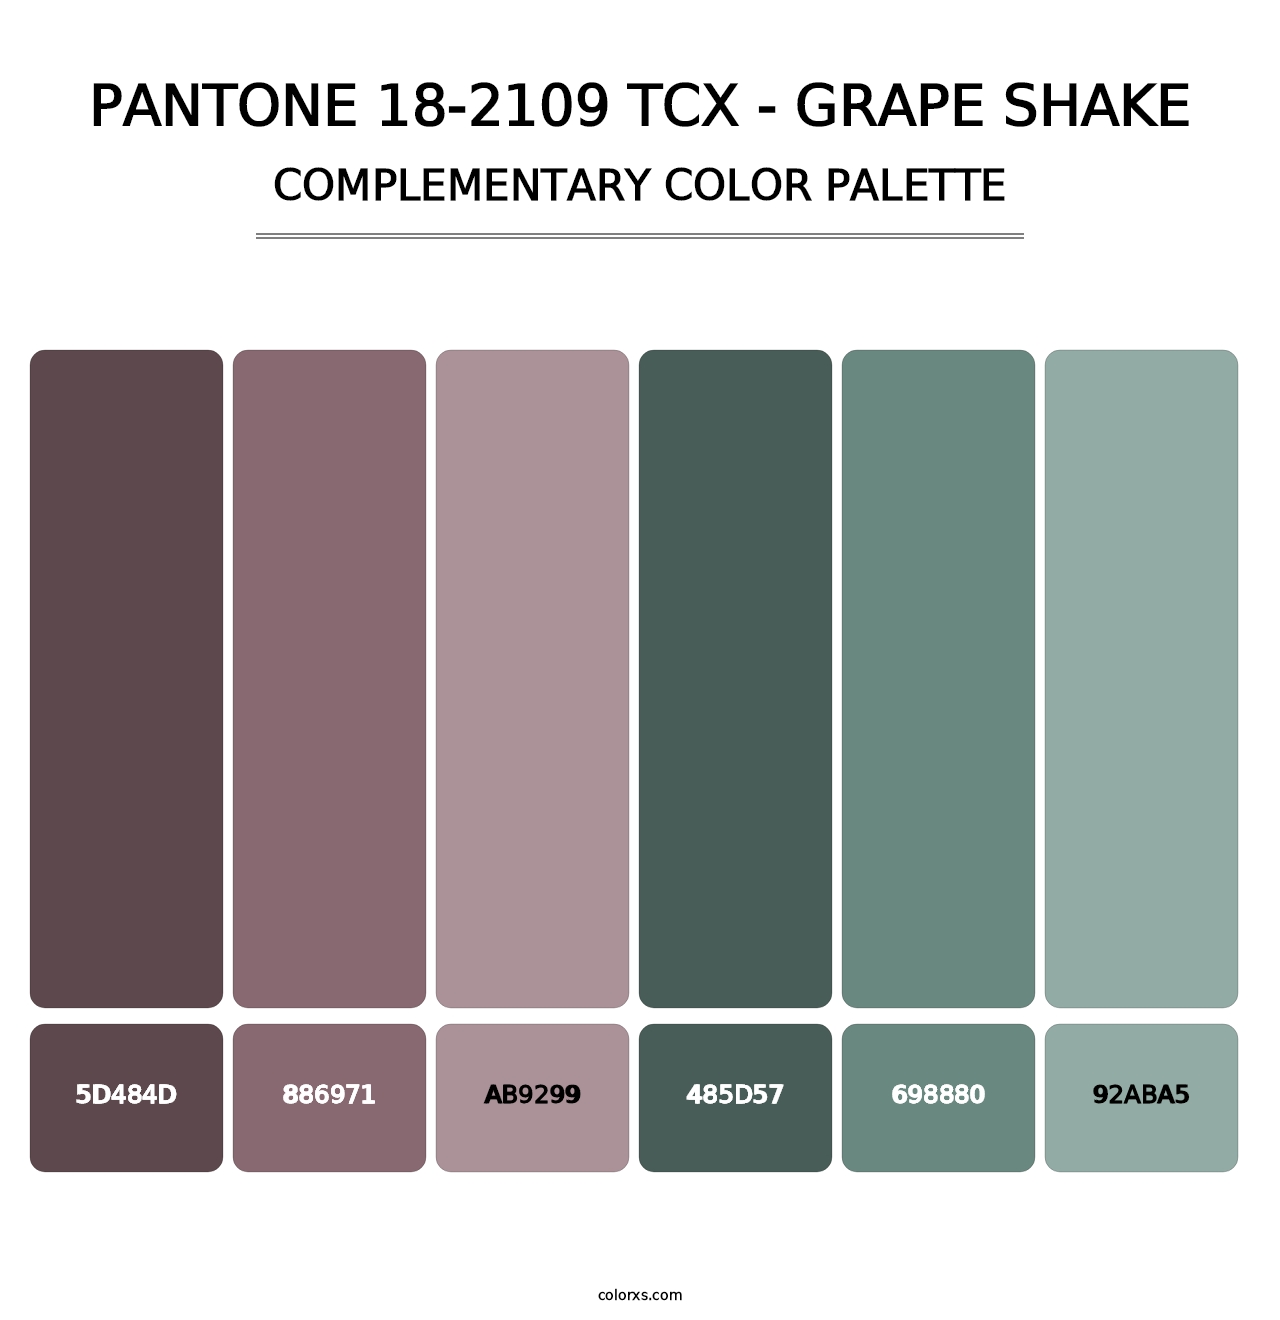 PANTONE 18-2109 TCX - Grape Shake - Complementary Color Palette